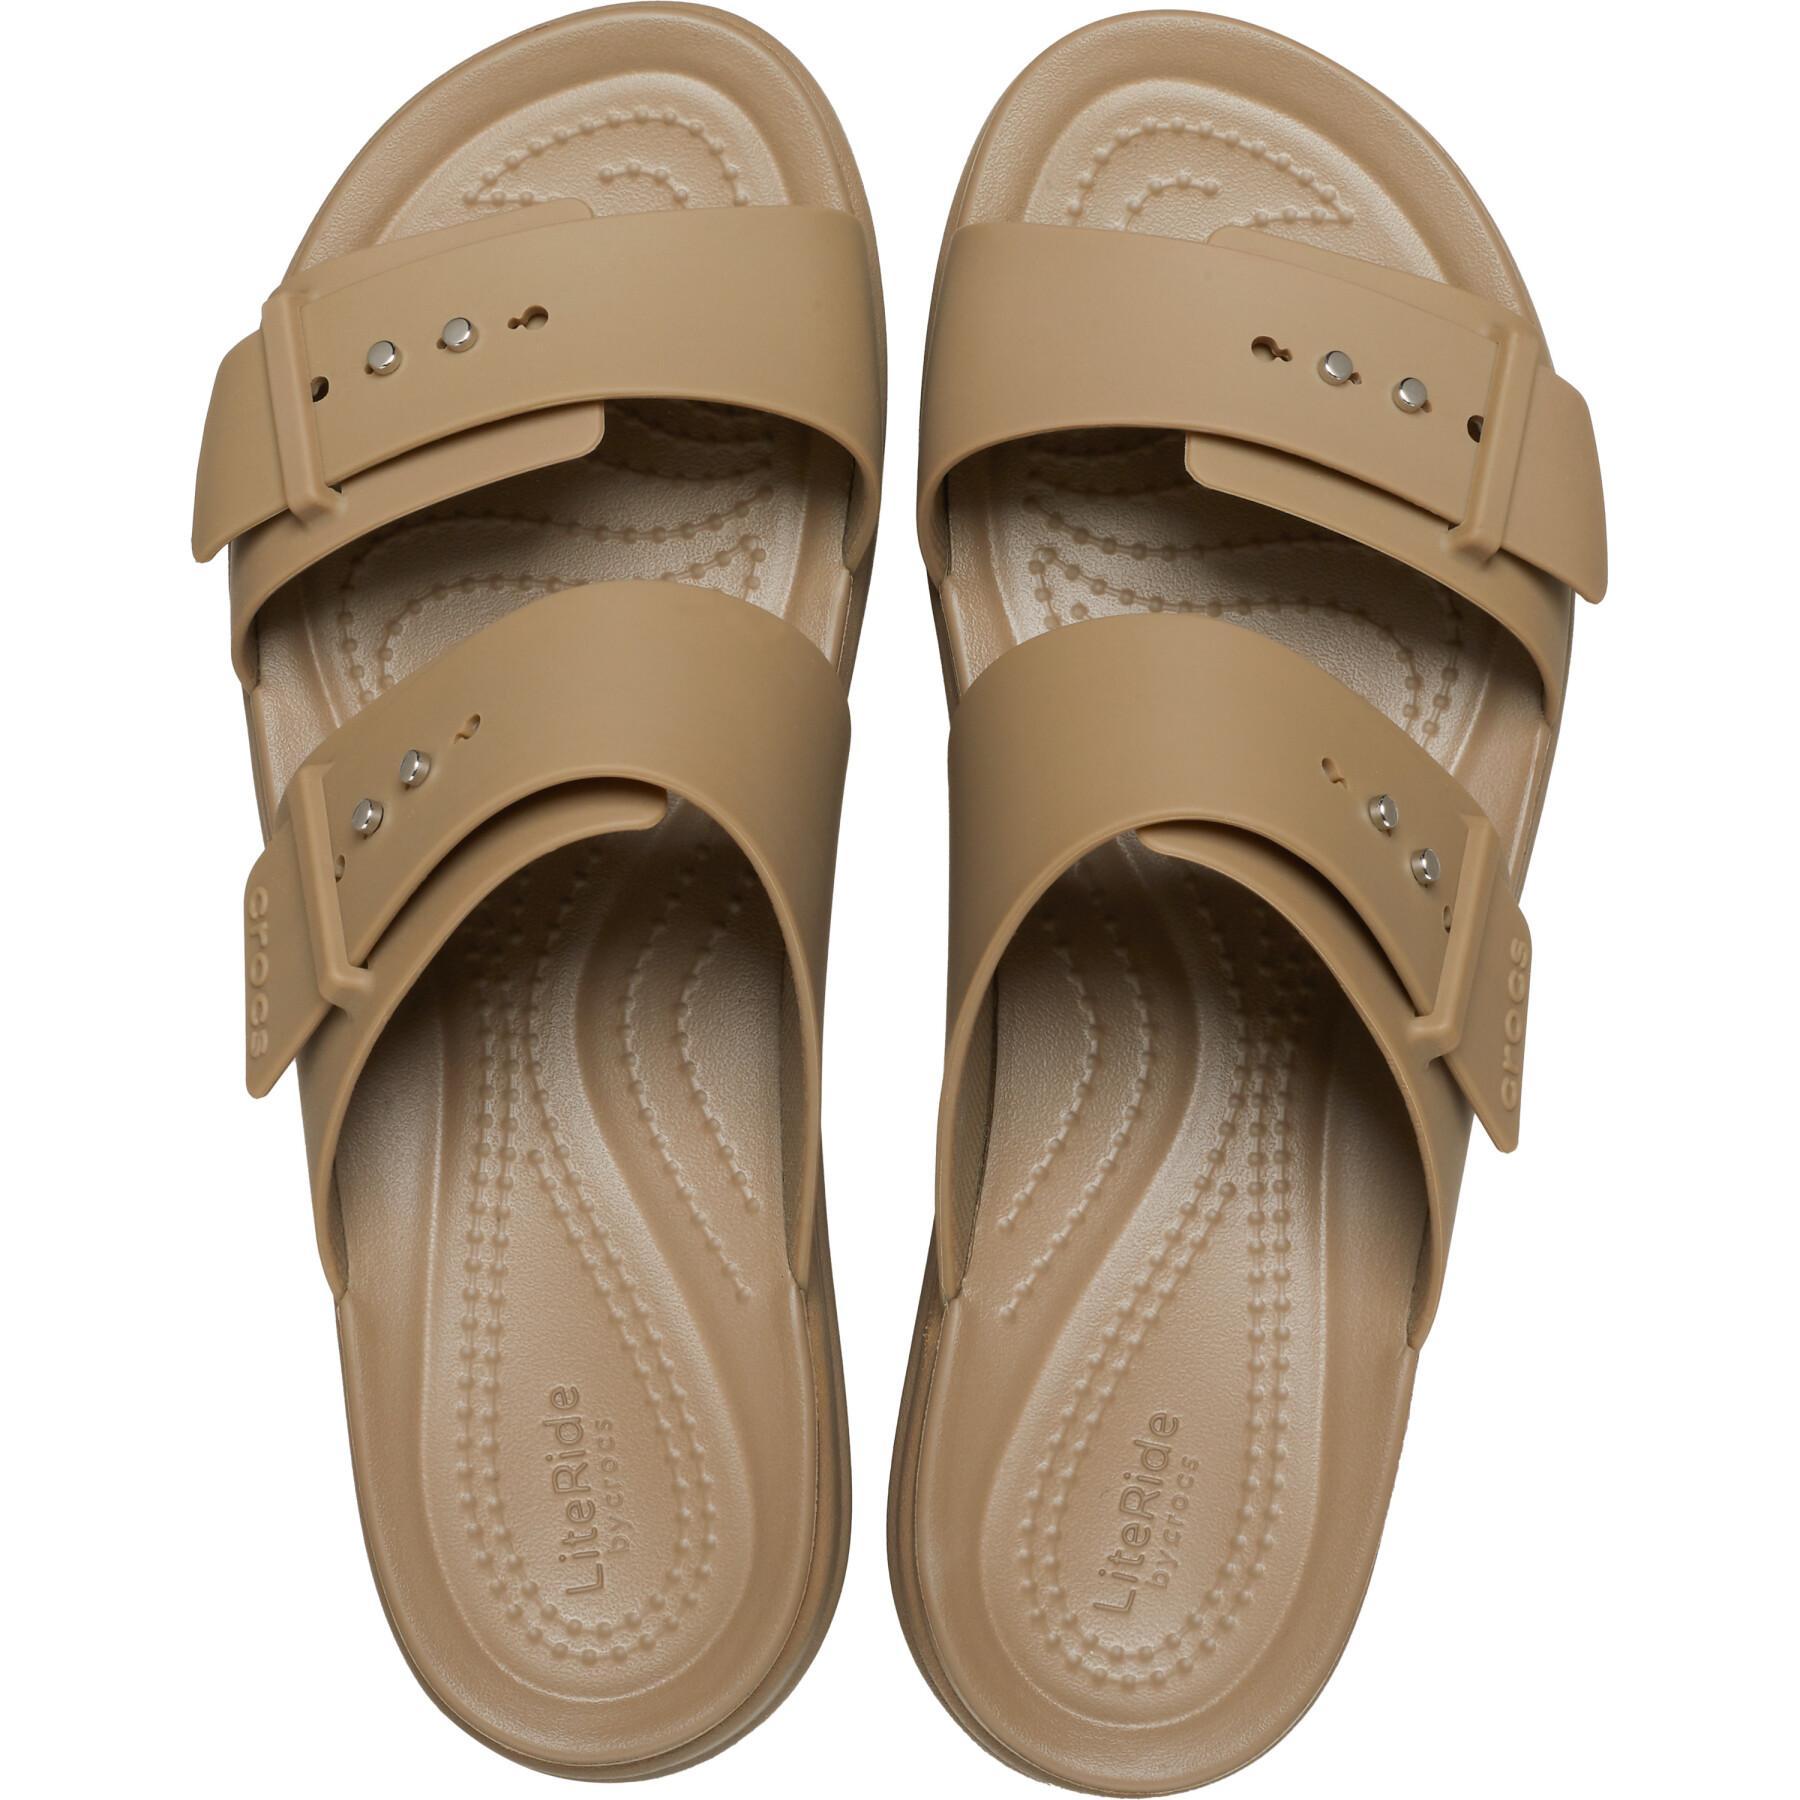 Buckle sandals for women Crocs Brooklyn